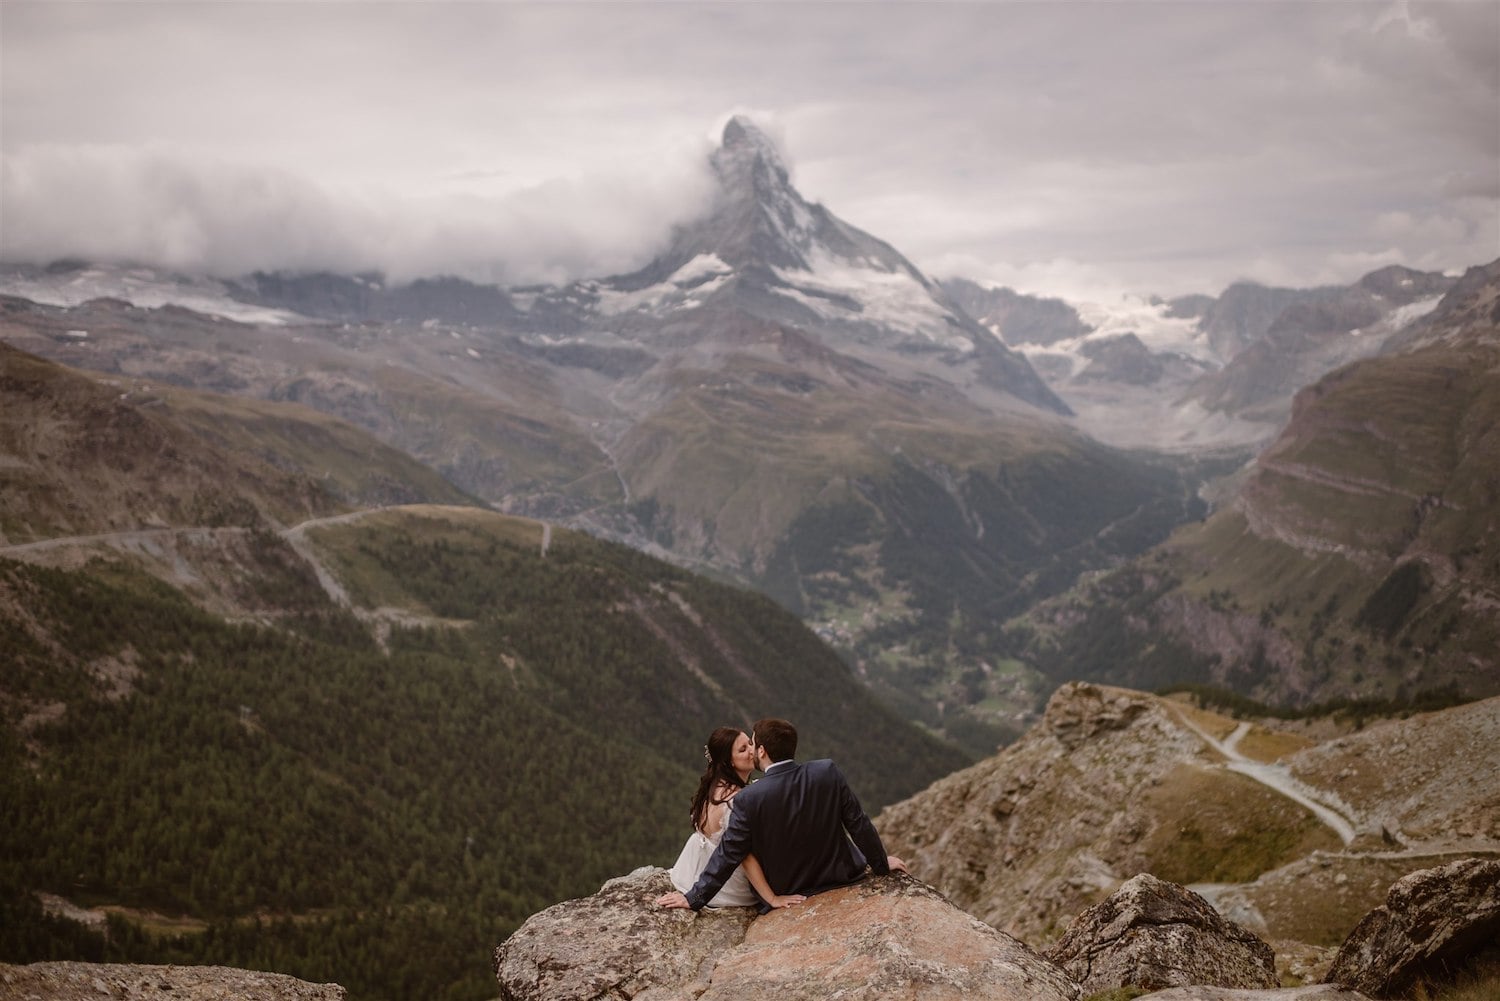 Lovers kissing in front of the Matterhorn in Zermatt, Switzerland